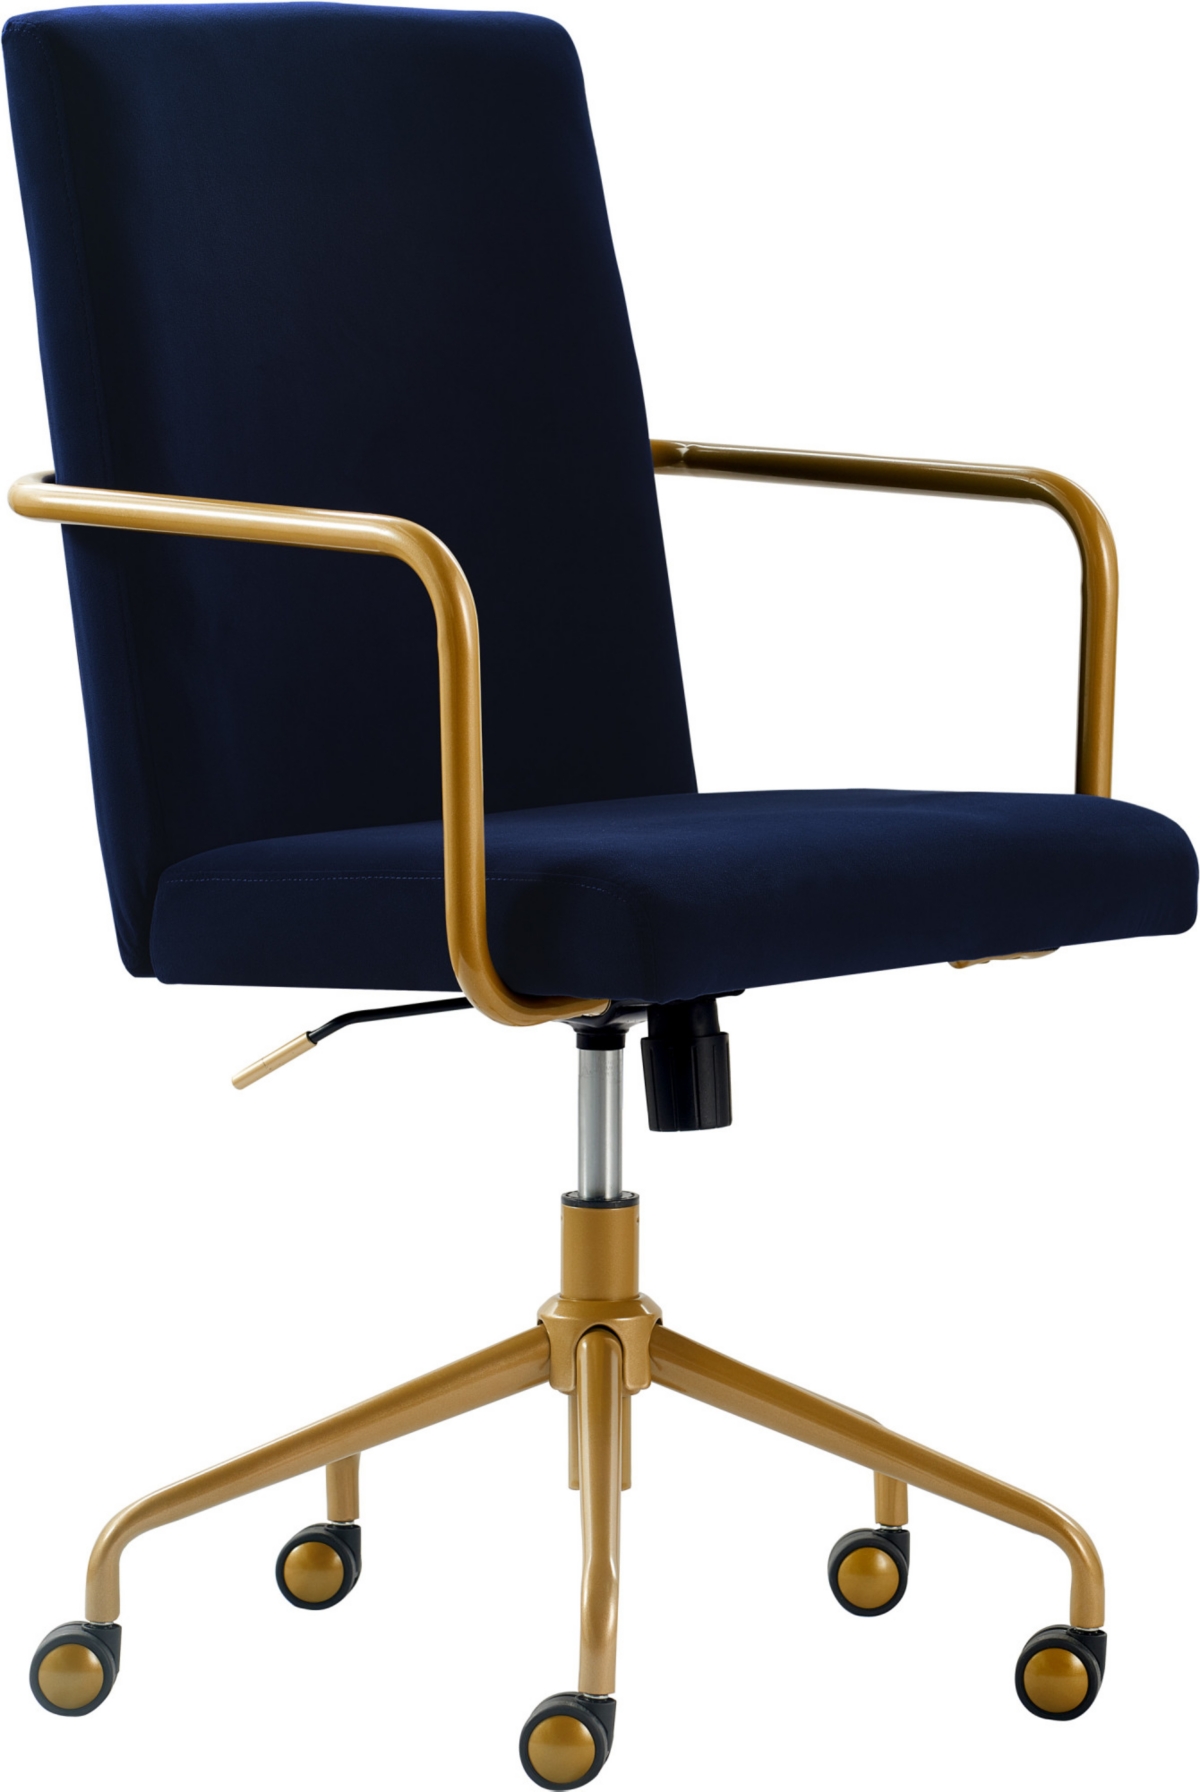 Elle Decor Giselle Office Chair In Blue